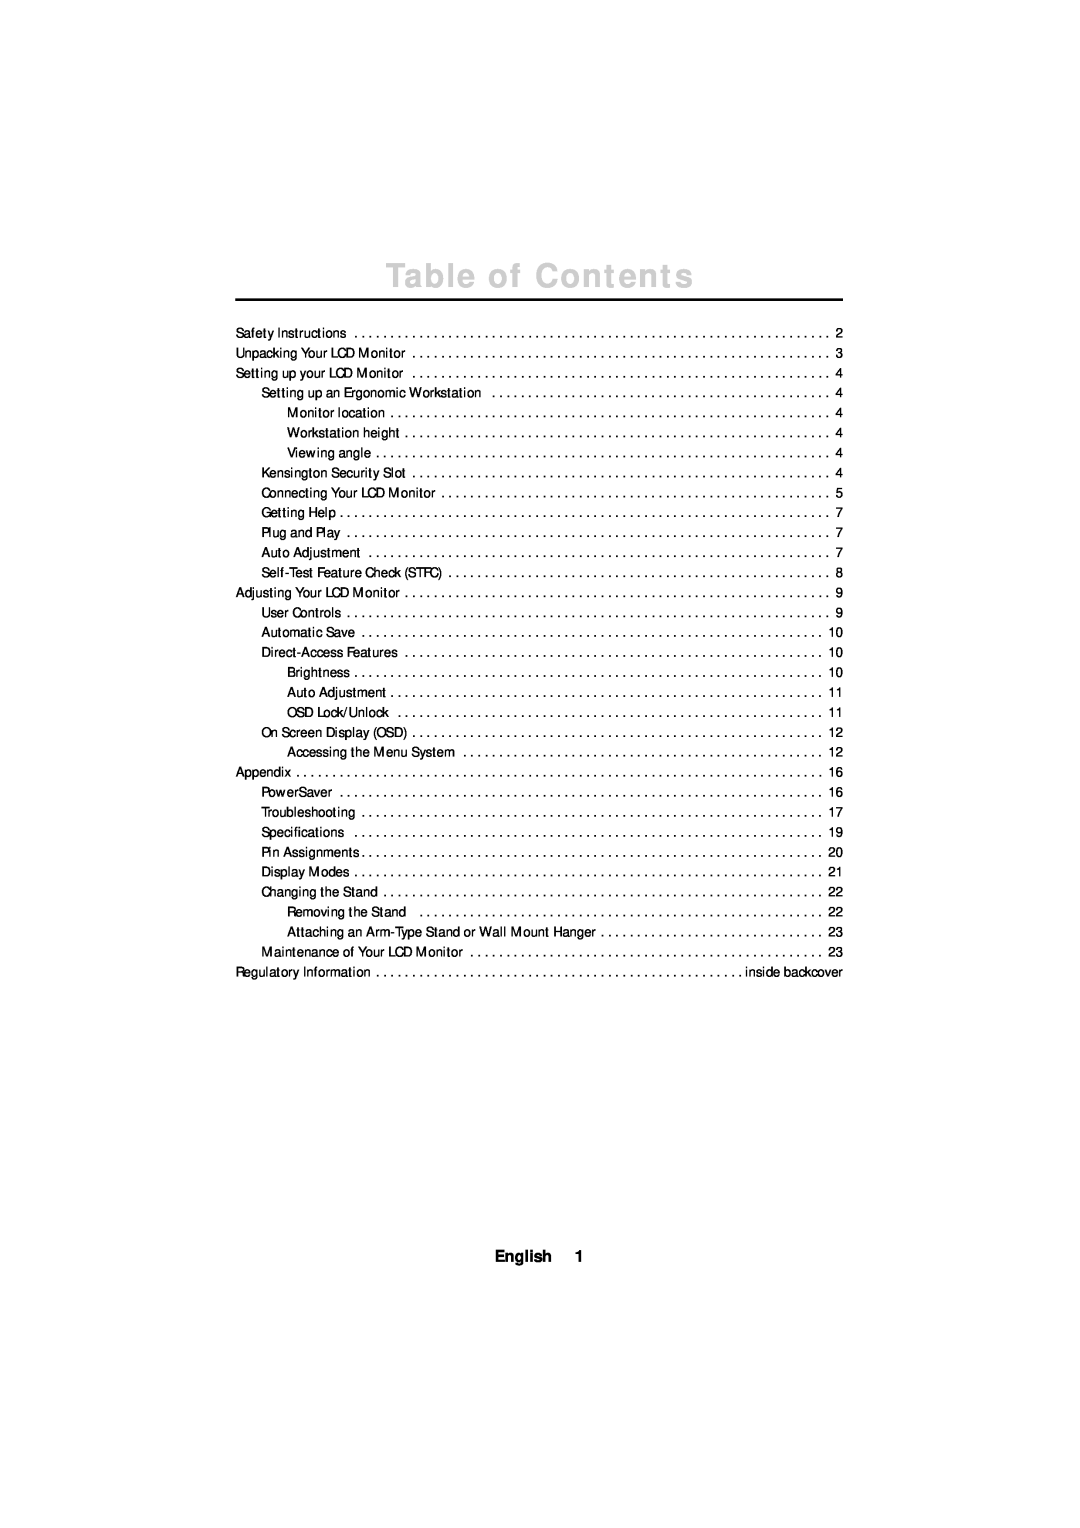 Samsung 180T manual Table of Contents, Portuguese Italiano Español Deutsch Français English, Brightness, Auto Adjustment 